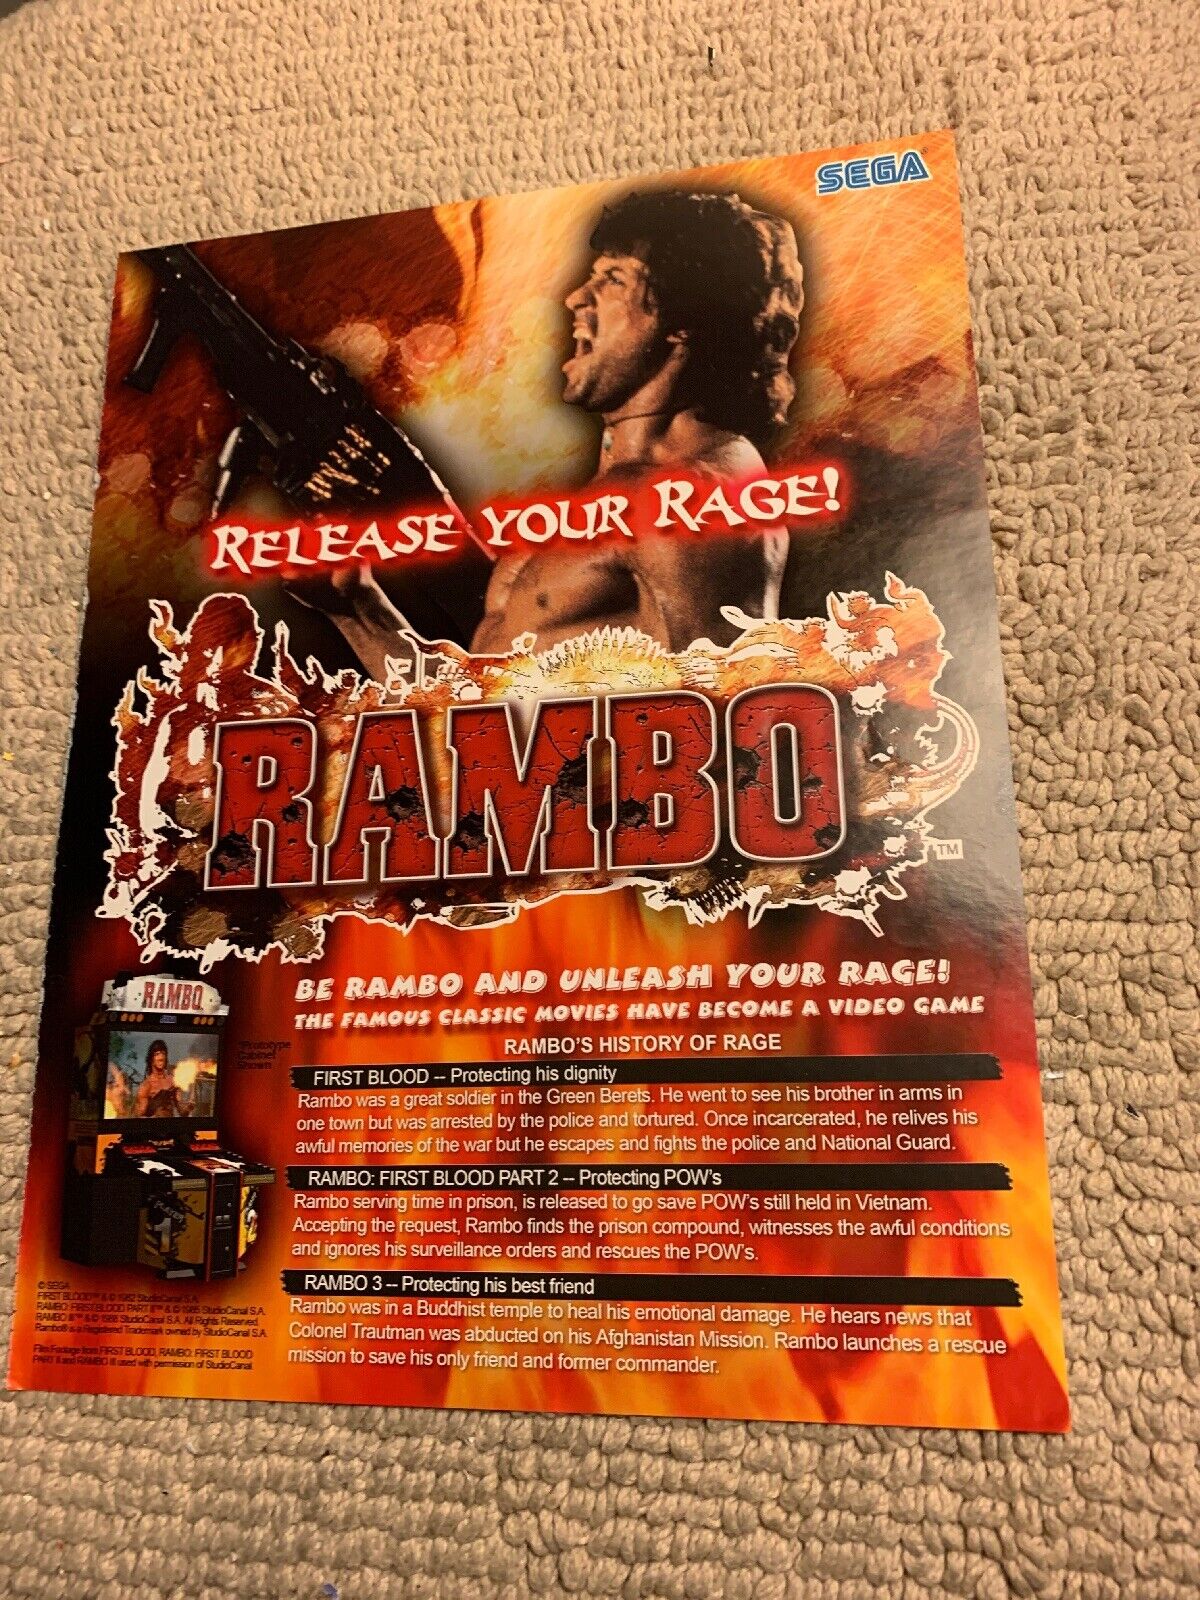 Original 11-8 1/4” Rambo Sega Arcade Video Game Flyer Ad